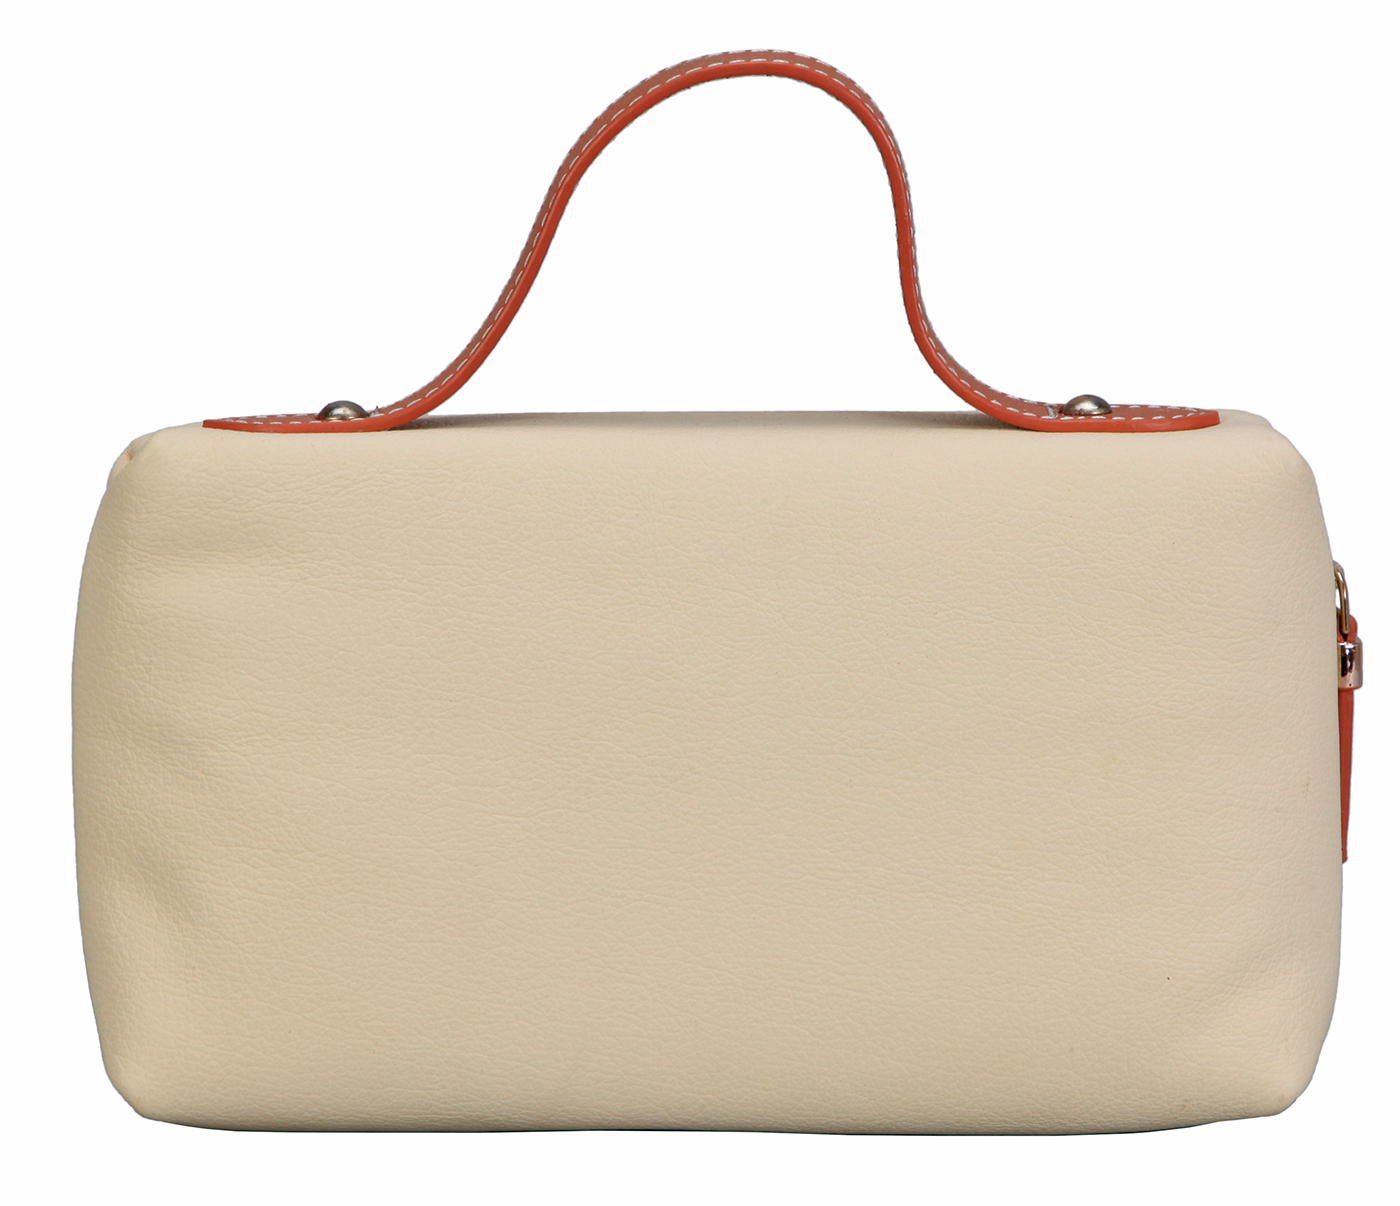 B865-Florencia-Shoulder work bag in Genuine Leather - Offwhite